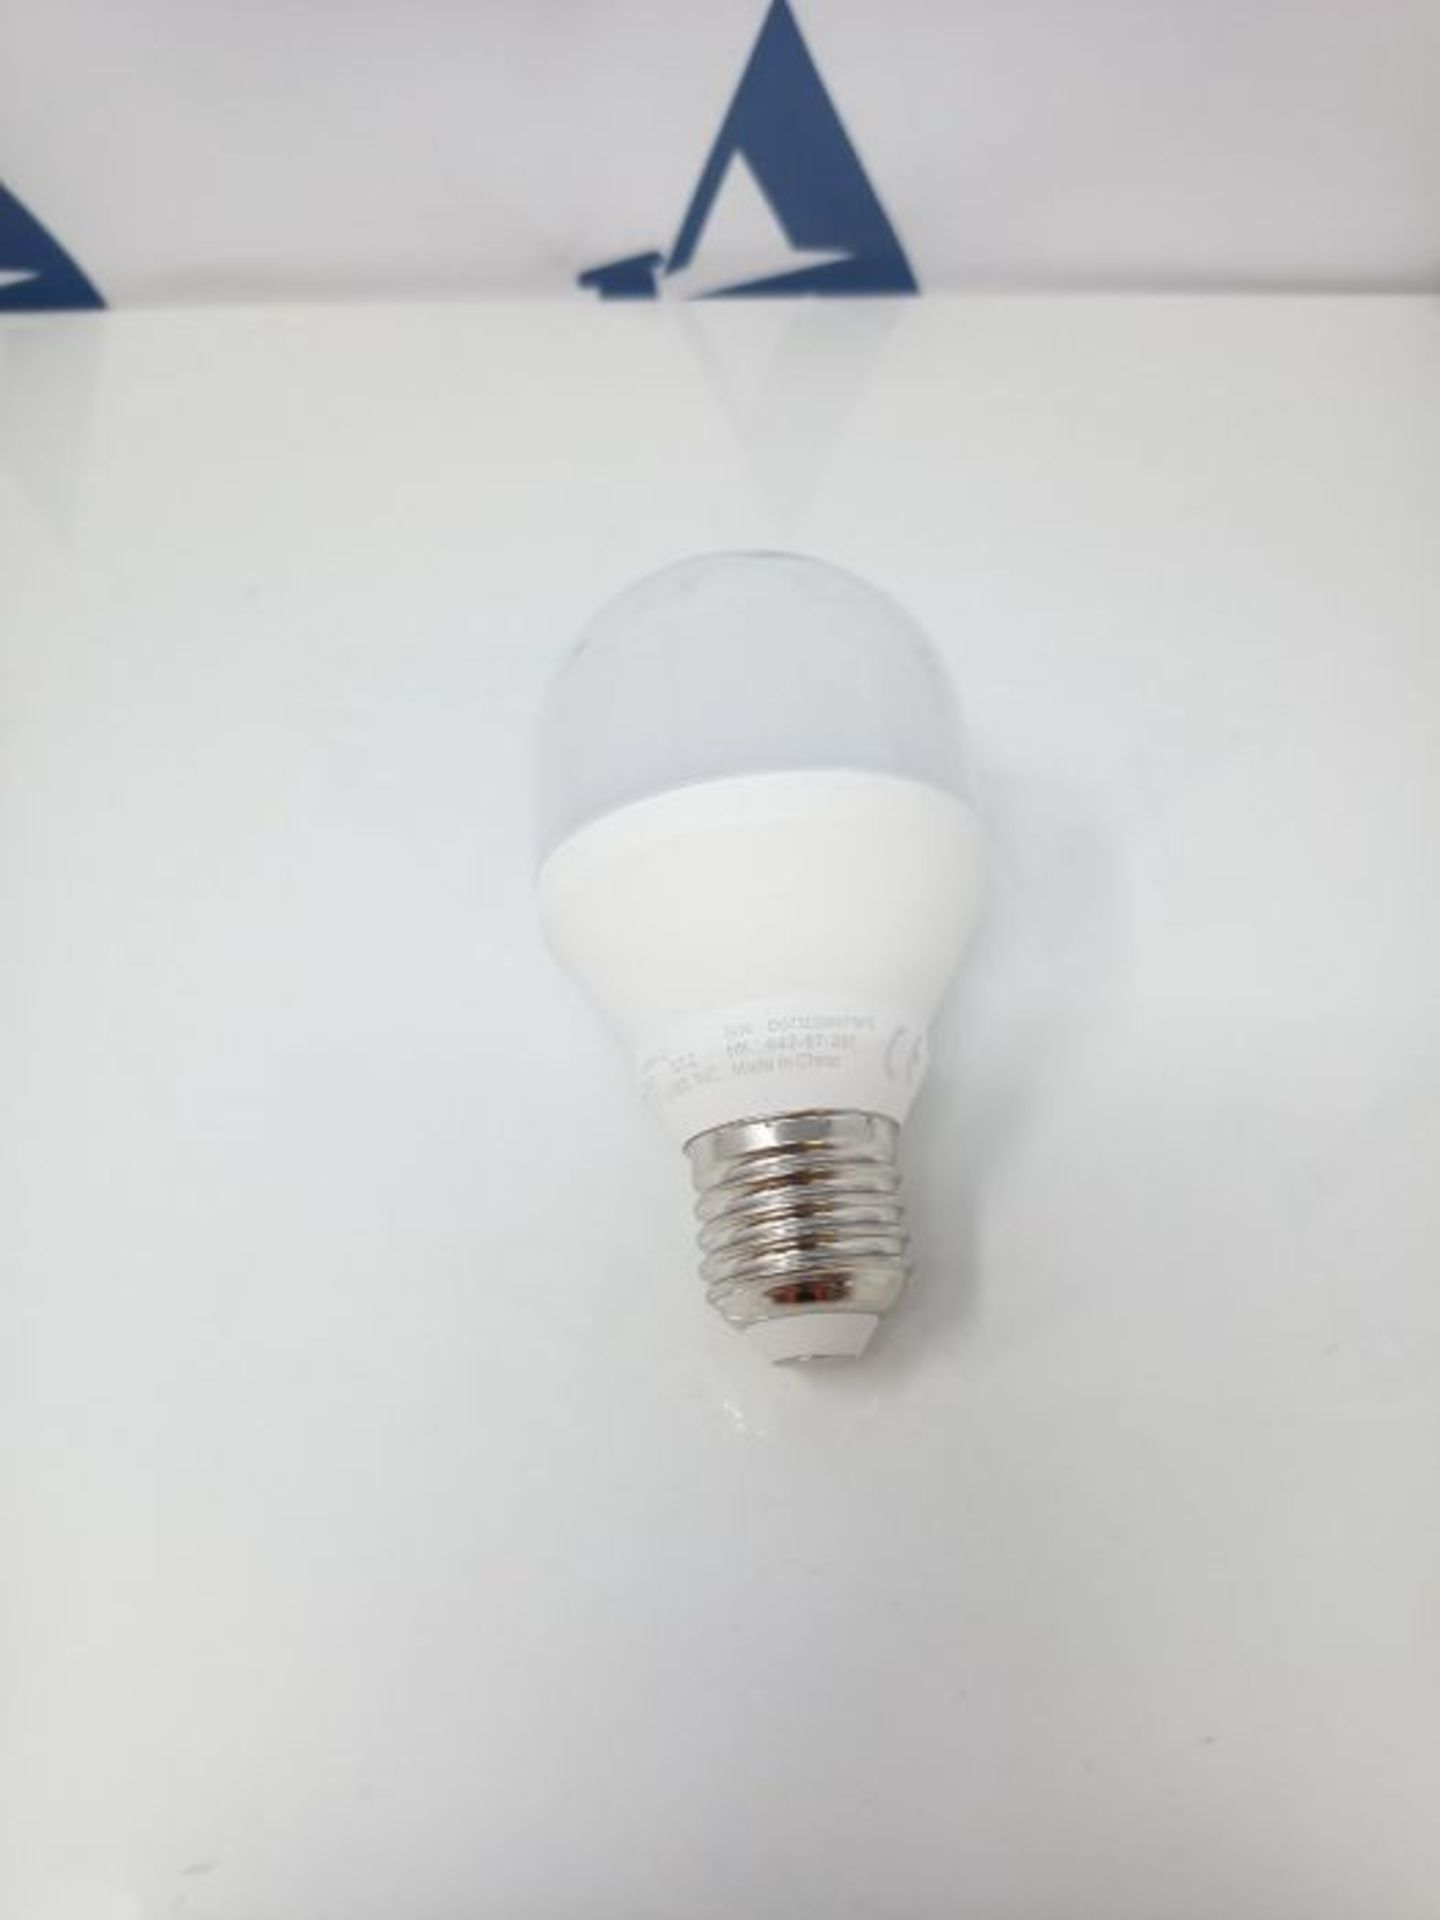 LIFX White to Warm A60 1000 lumens [E27 Edison Screw], Wi-Fi Smart LED Light Bulb, Tun - Image 3 of 3